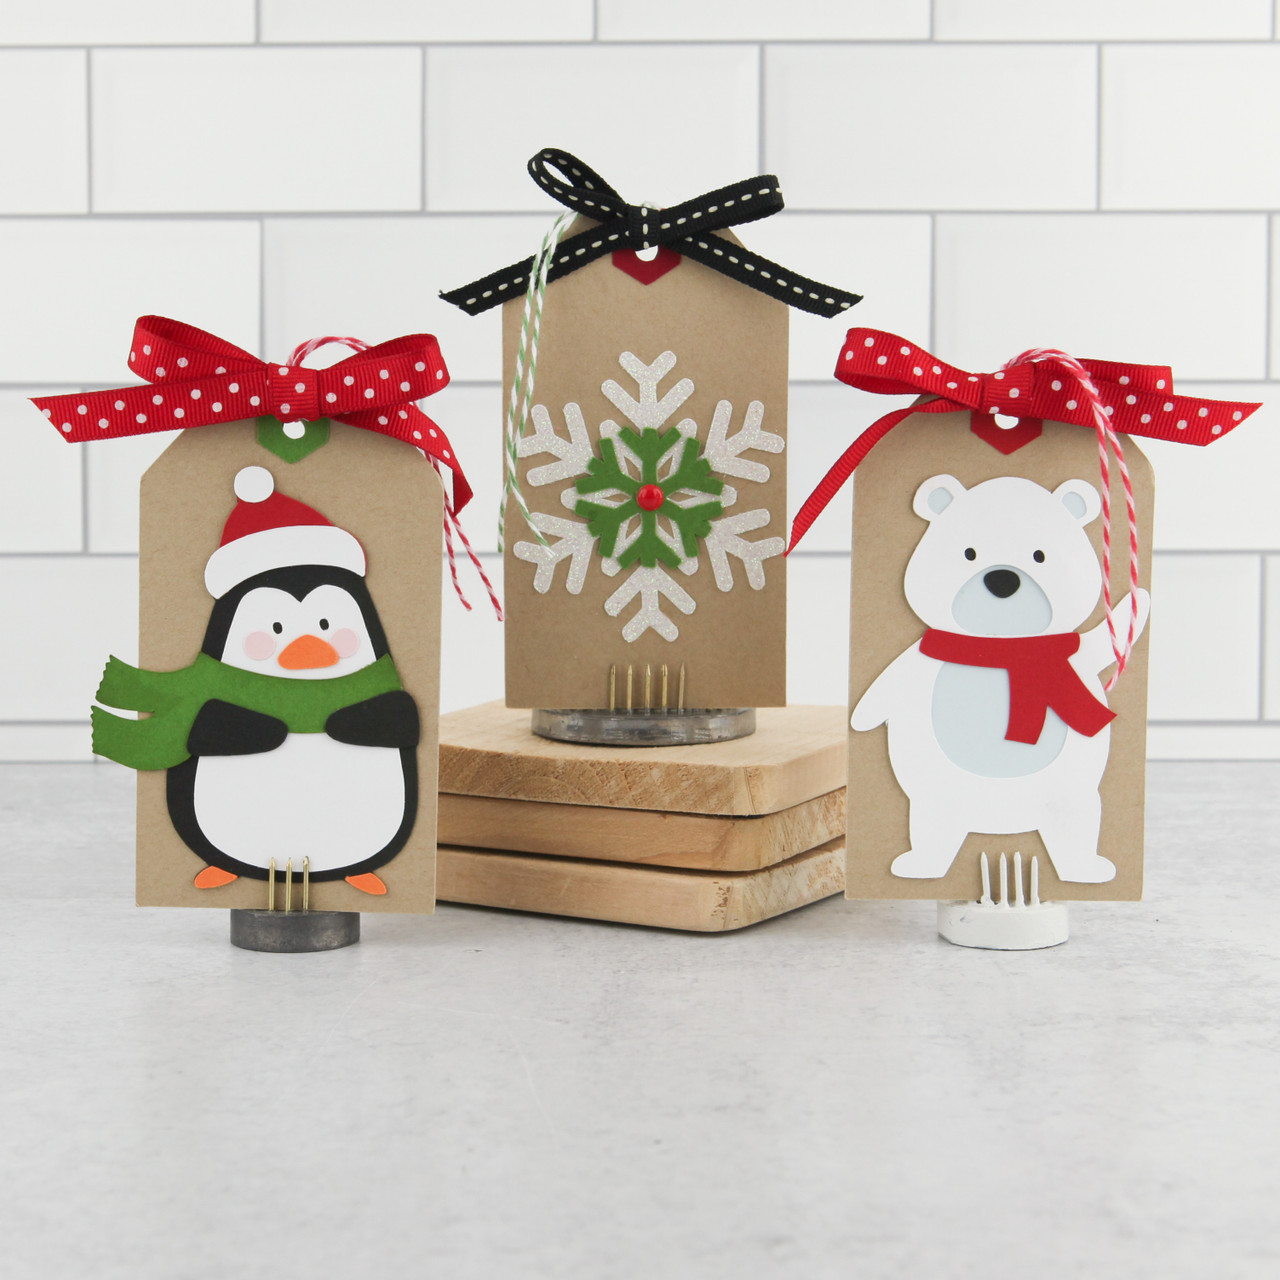 Christmas Bucket List 2 - Lori Whitlock's SVG Shop